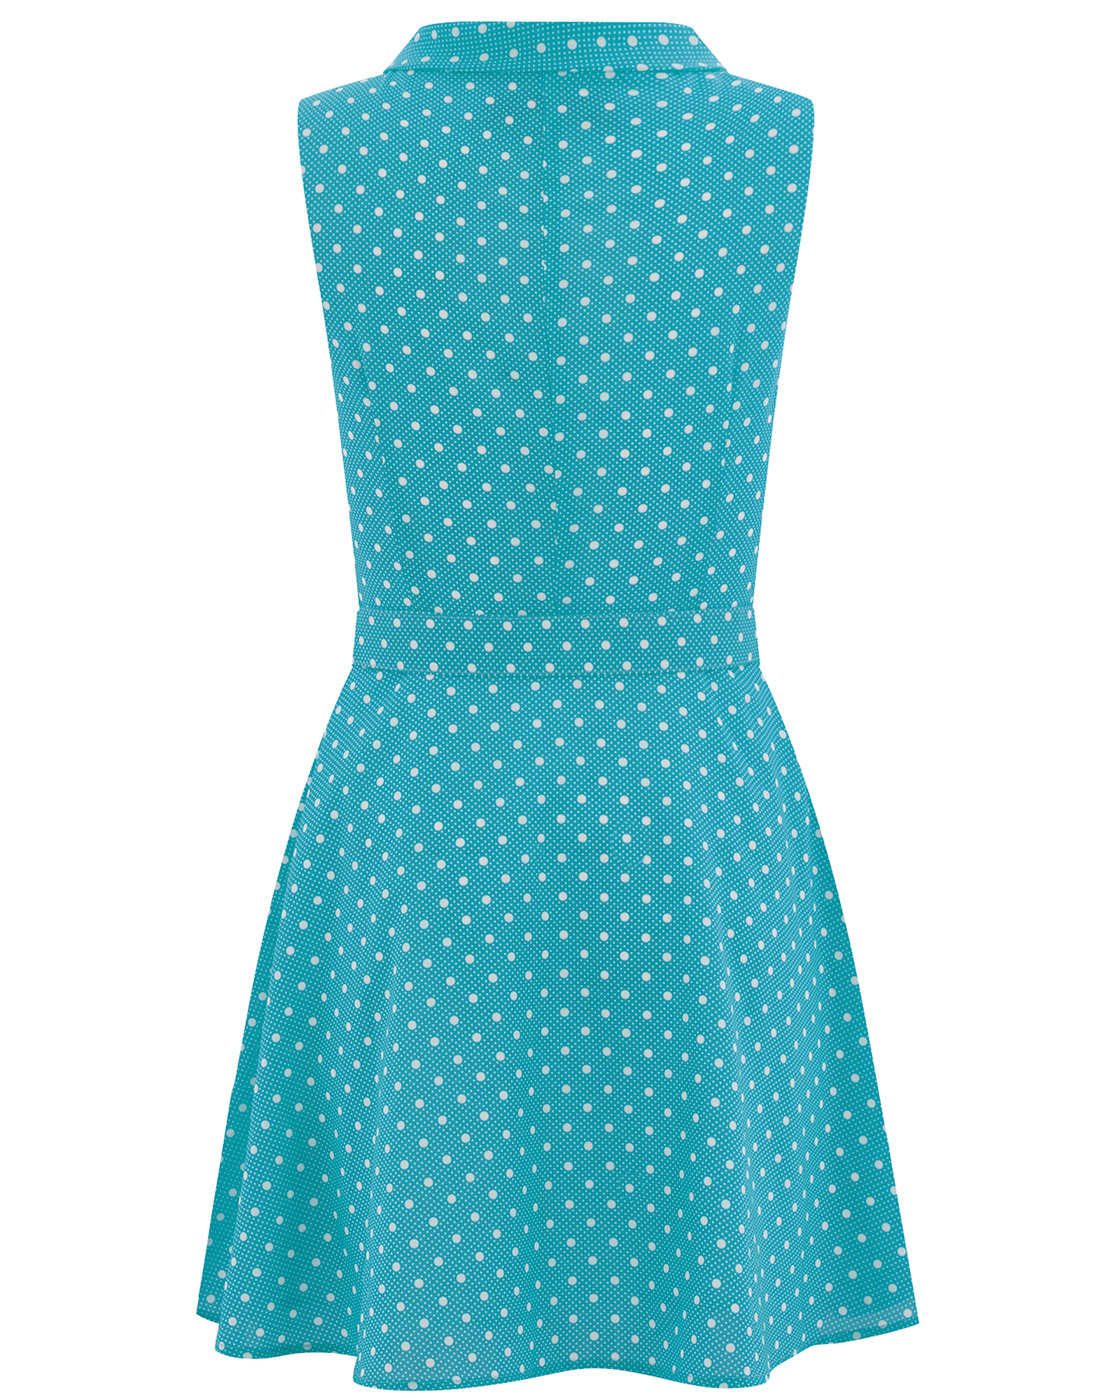 BRIGHT & BEAUTIFUL Ruth 60s Mod Polka Dot Dress in Blue/White